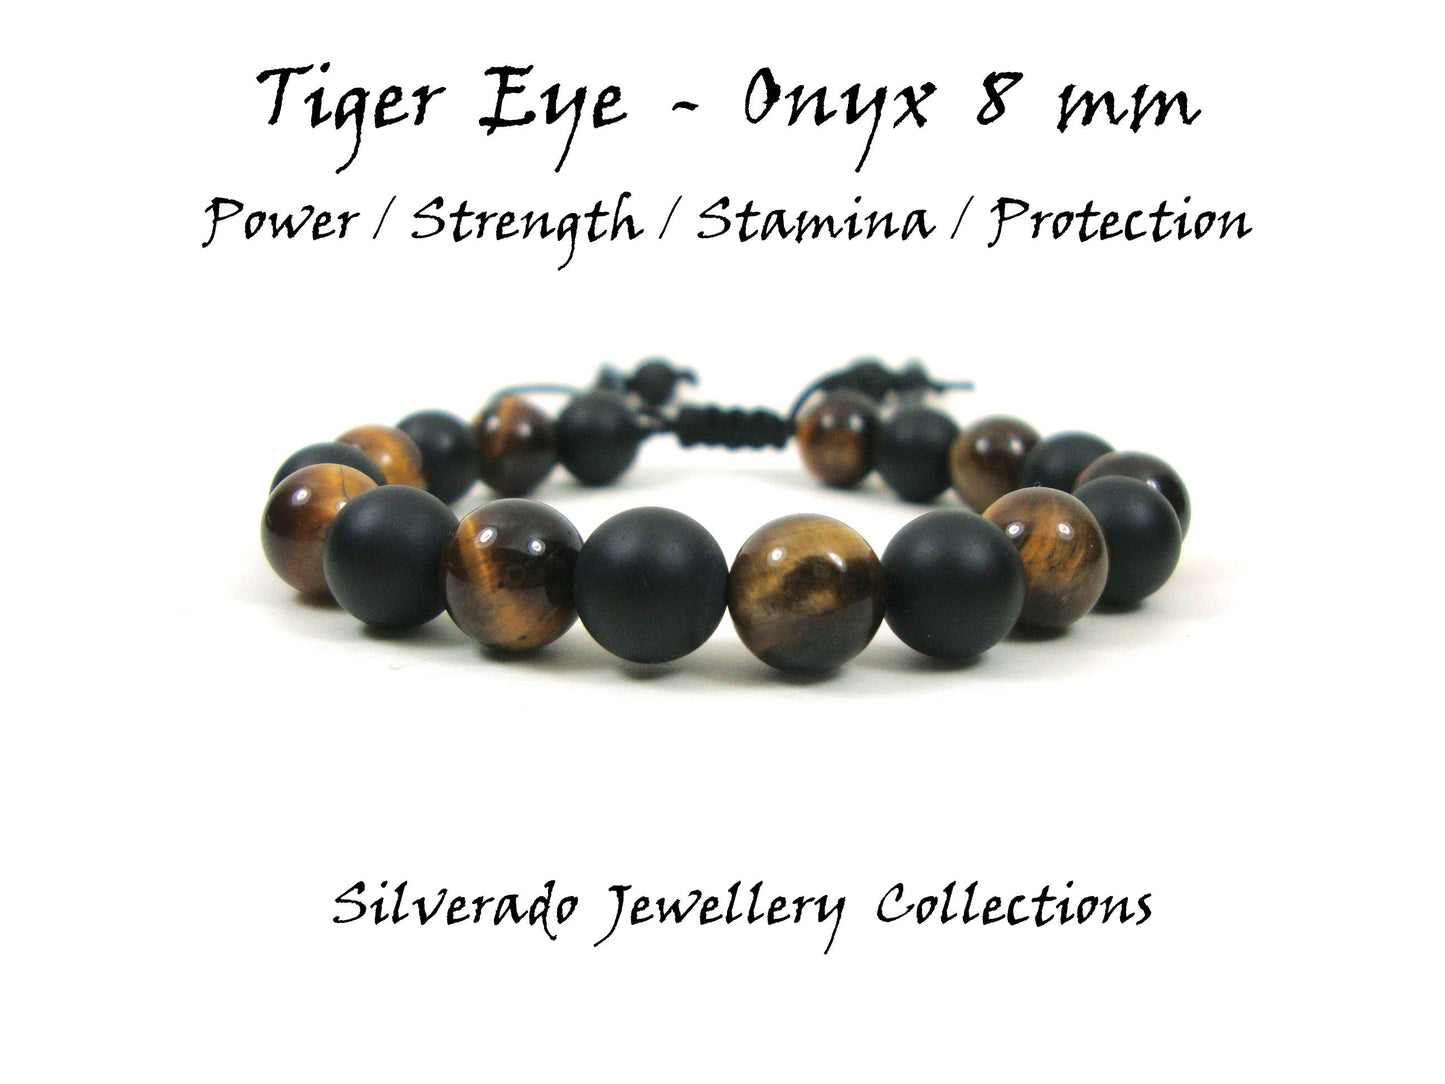 Onyx naturel - Tiger Eye Power Strength Stamina Stones 8mm Bracelet de pierres précieuses, Bracelet unisexe homme femme, Bracelet extensible Boho Onyx noir